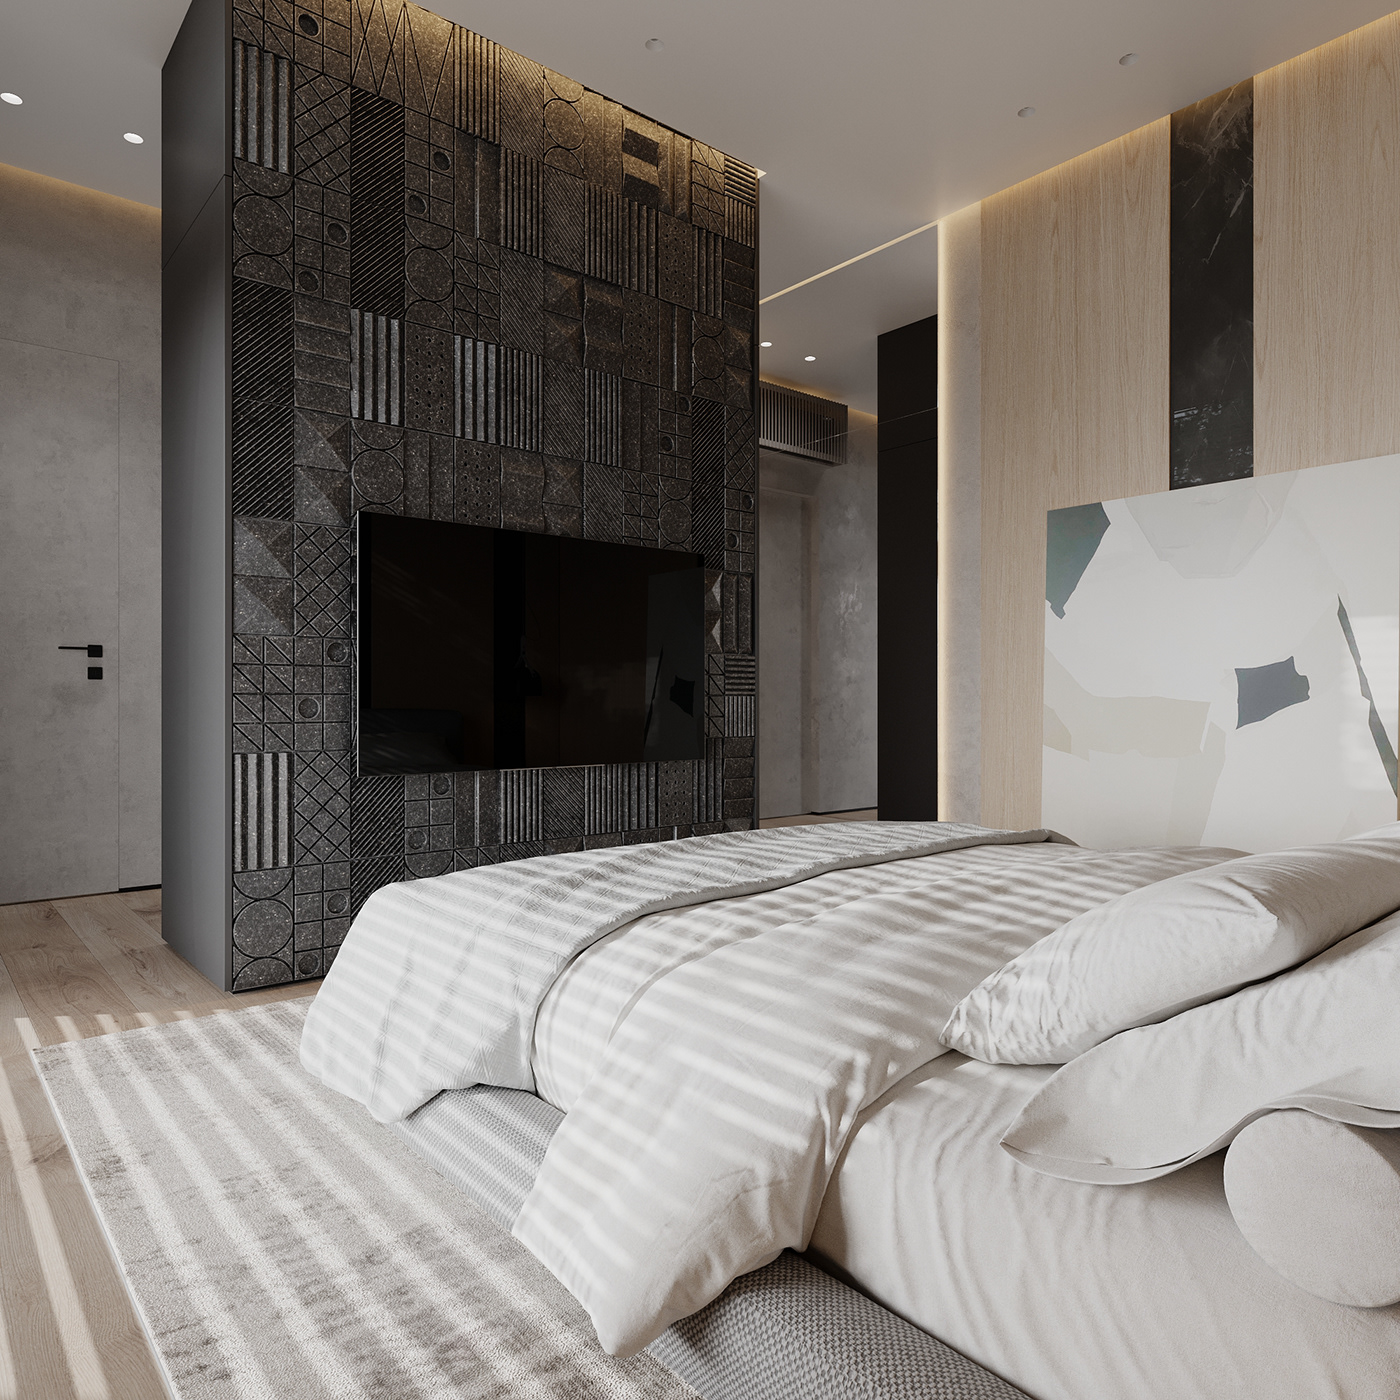 3ds max apartment architecture design exterior interior design  Interior Project visualization